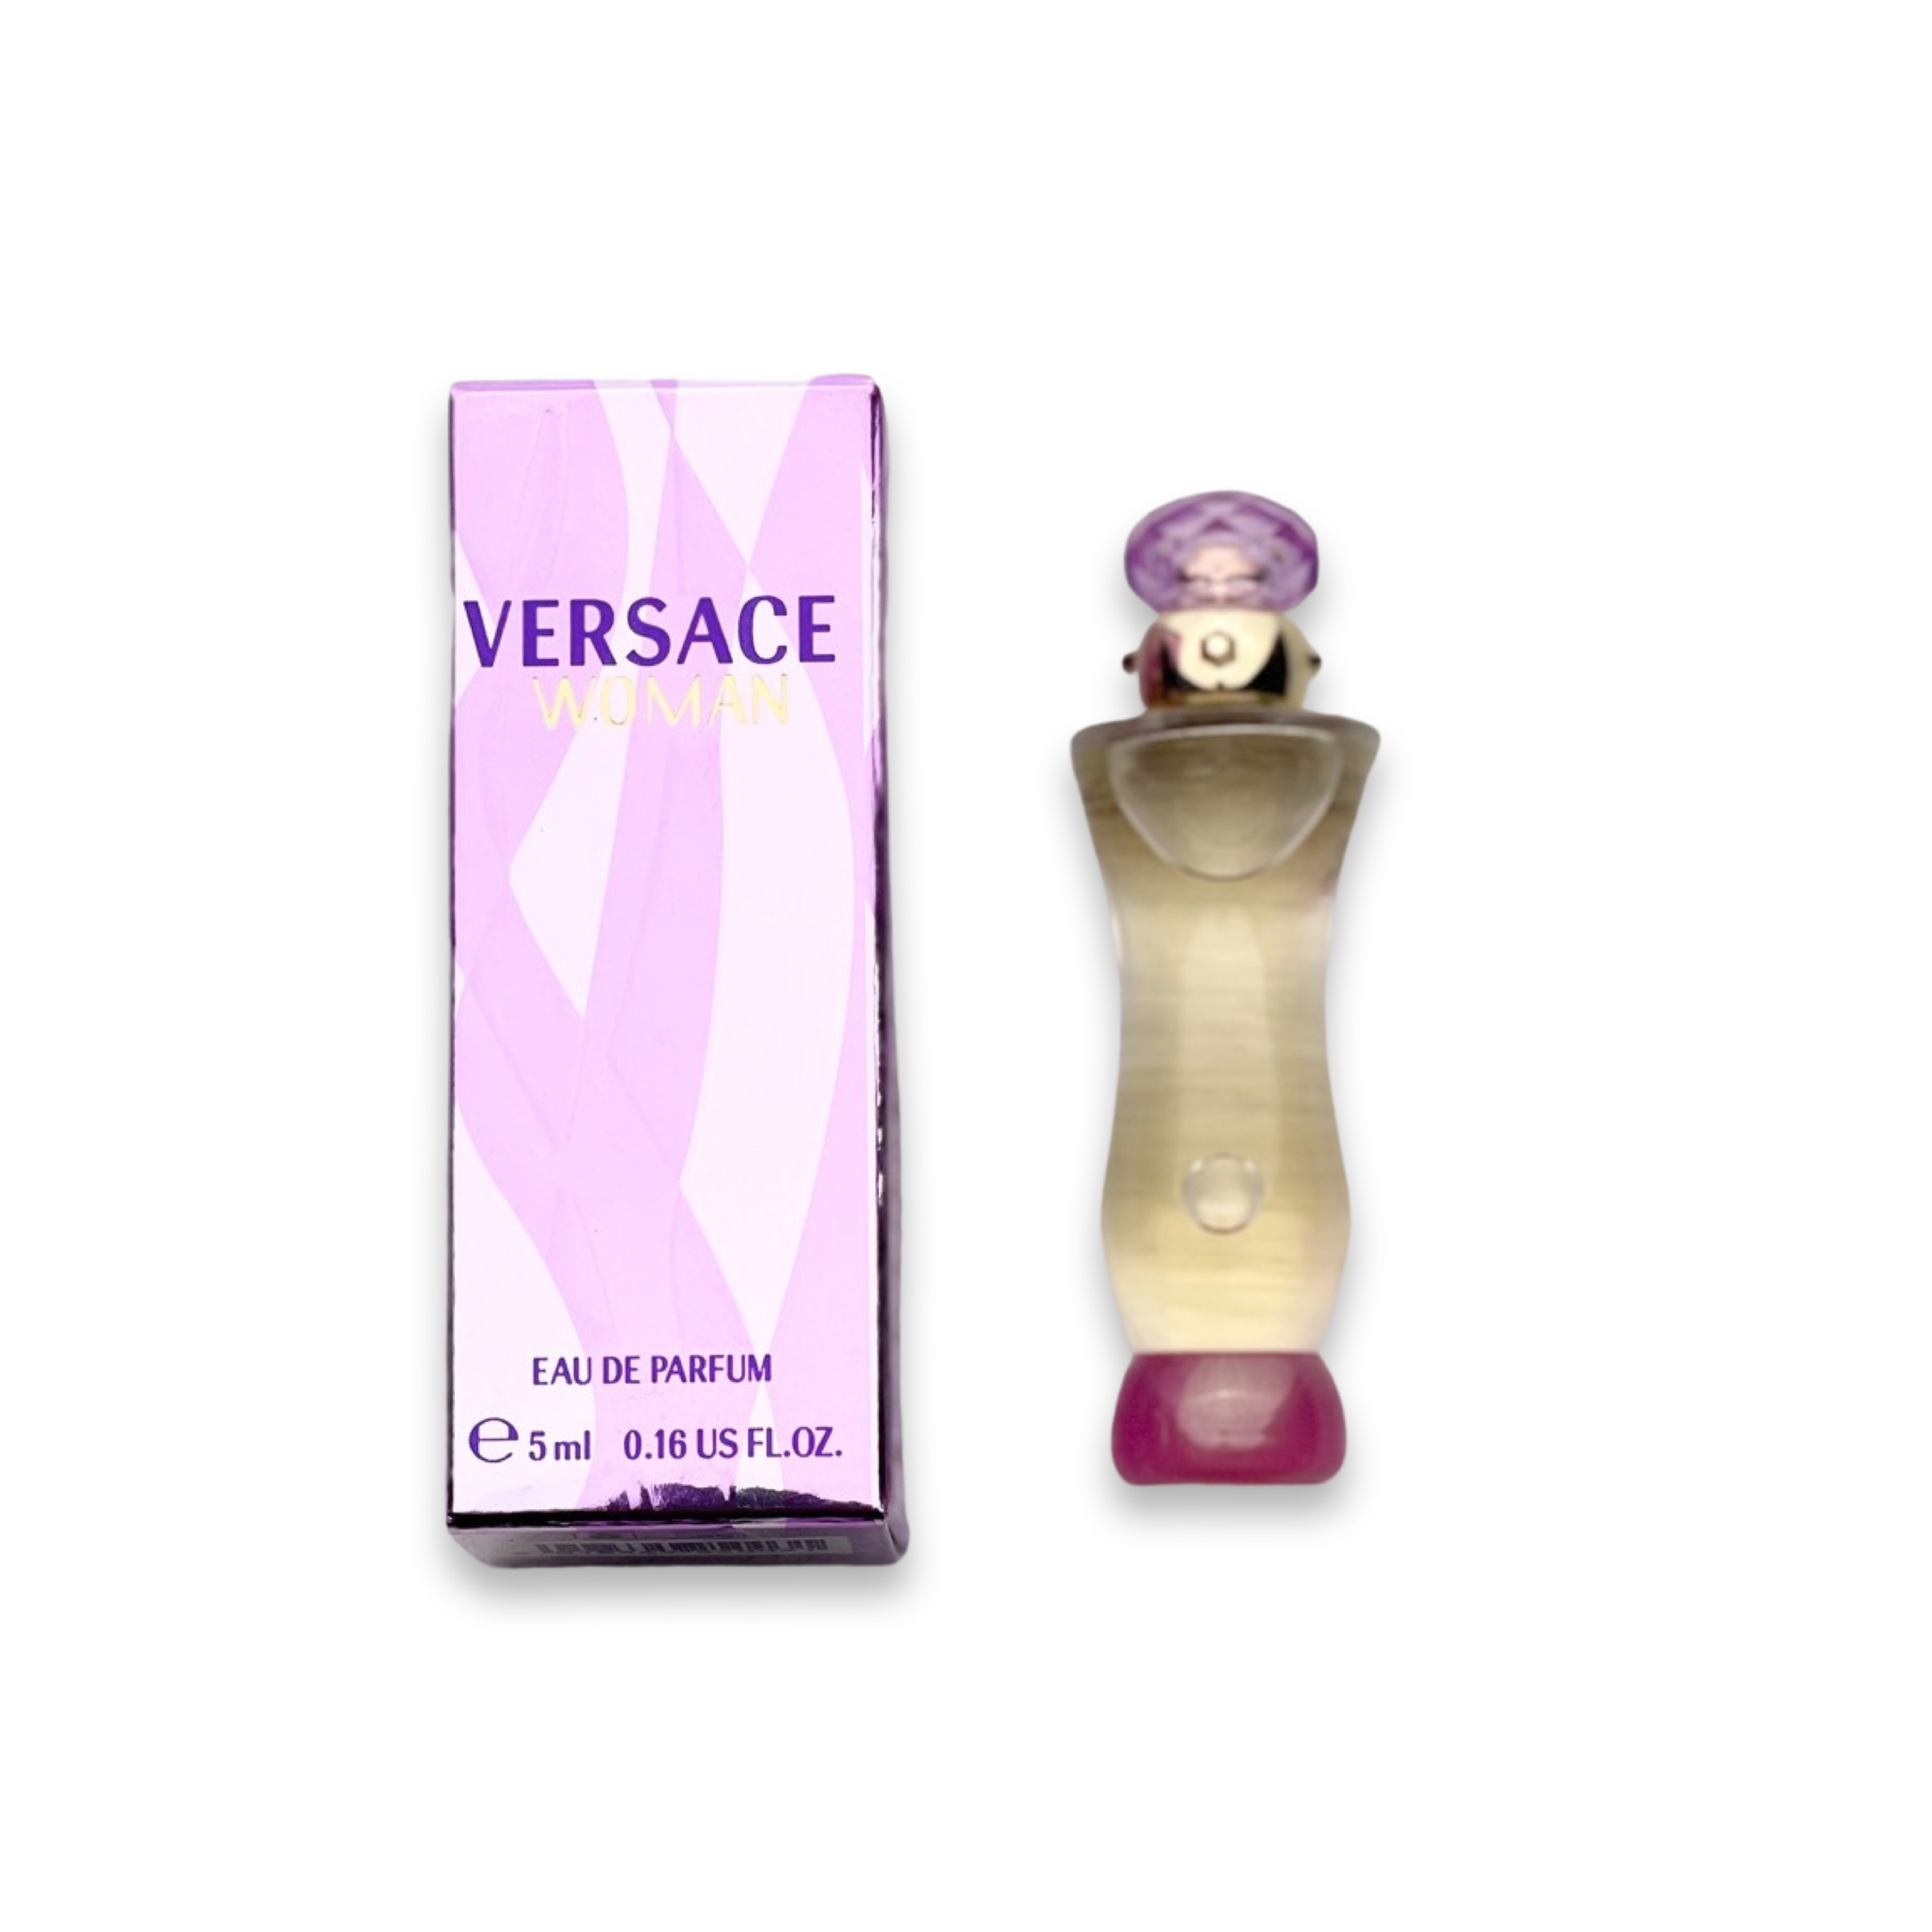 Versace Woman EDP / Travel Size (5ml)